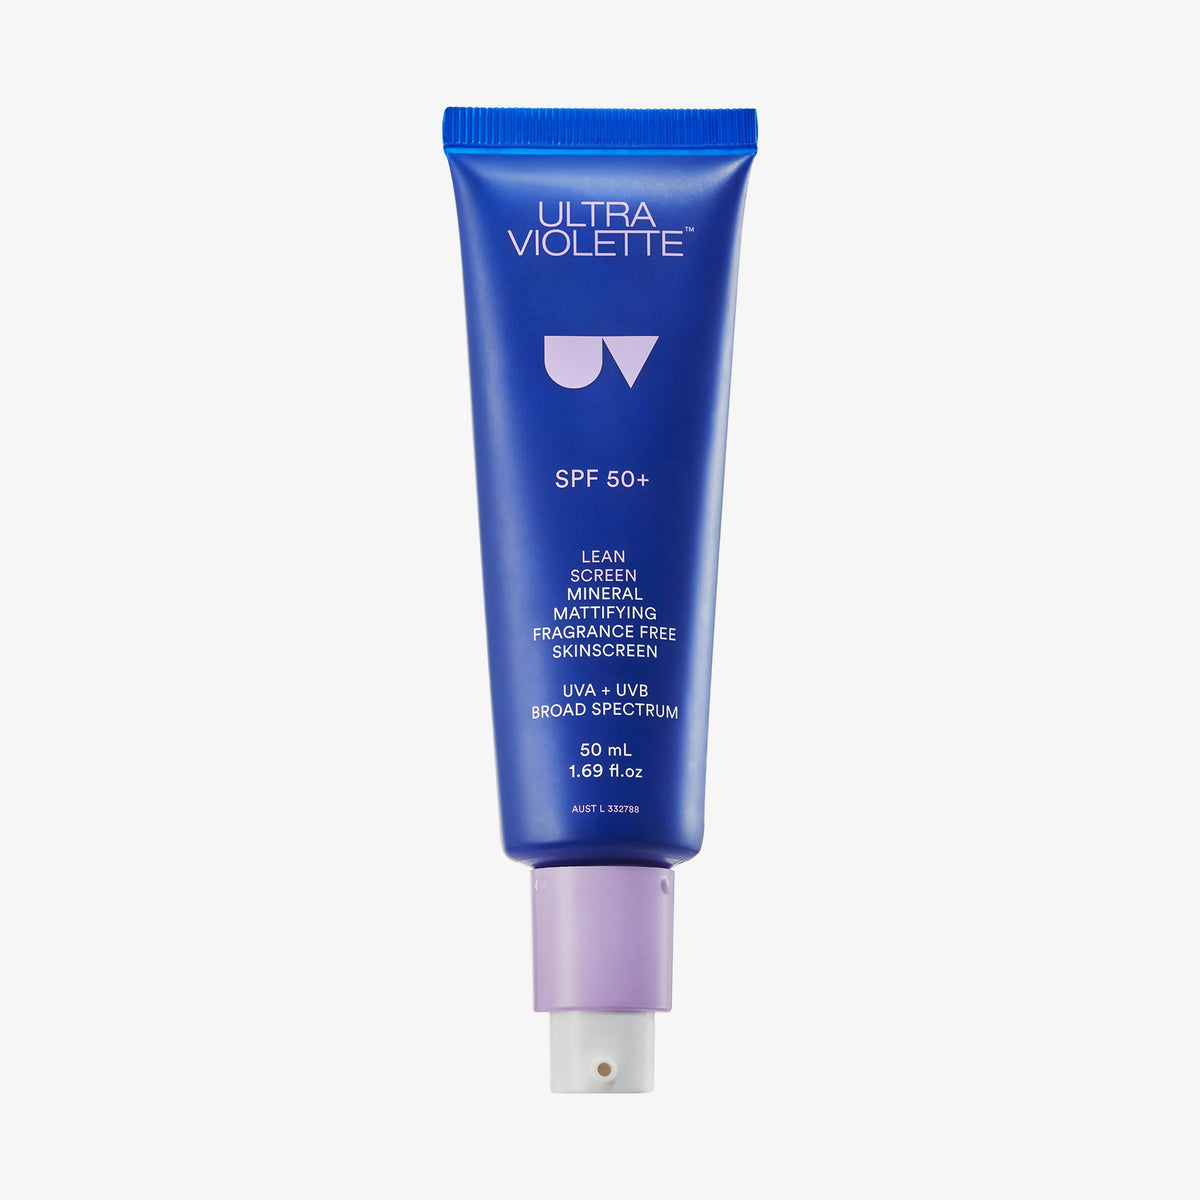 Ultra Violette | Lean Screen Mineral Mattifying Fragrance Free Skinscreen SPF50+